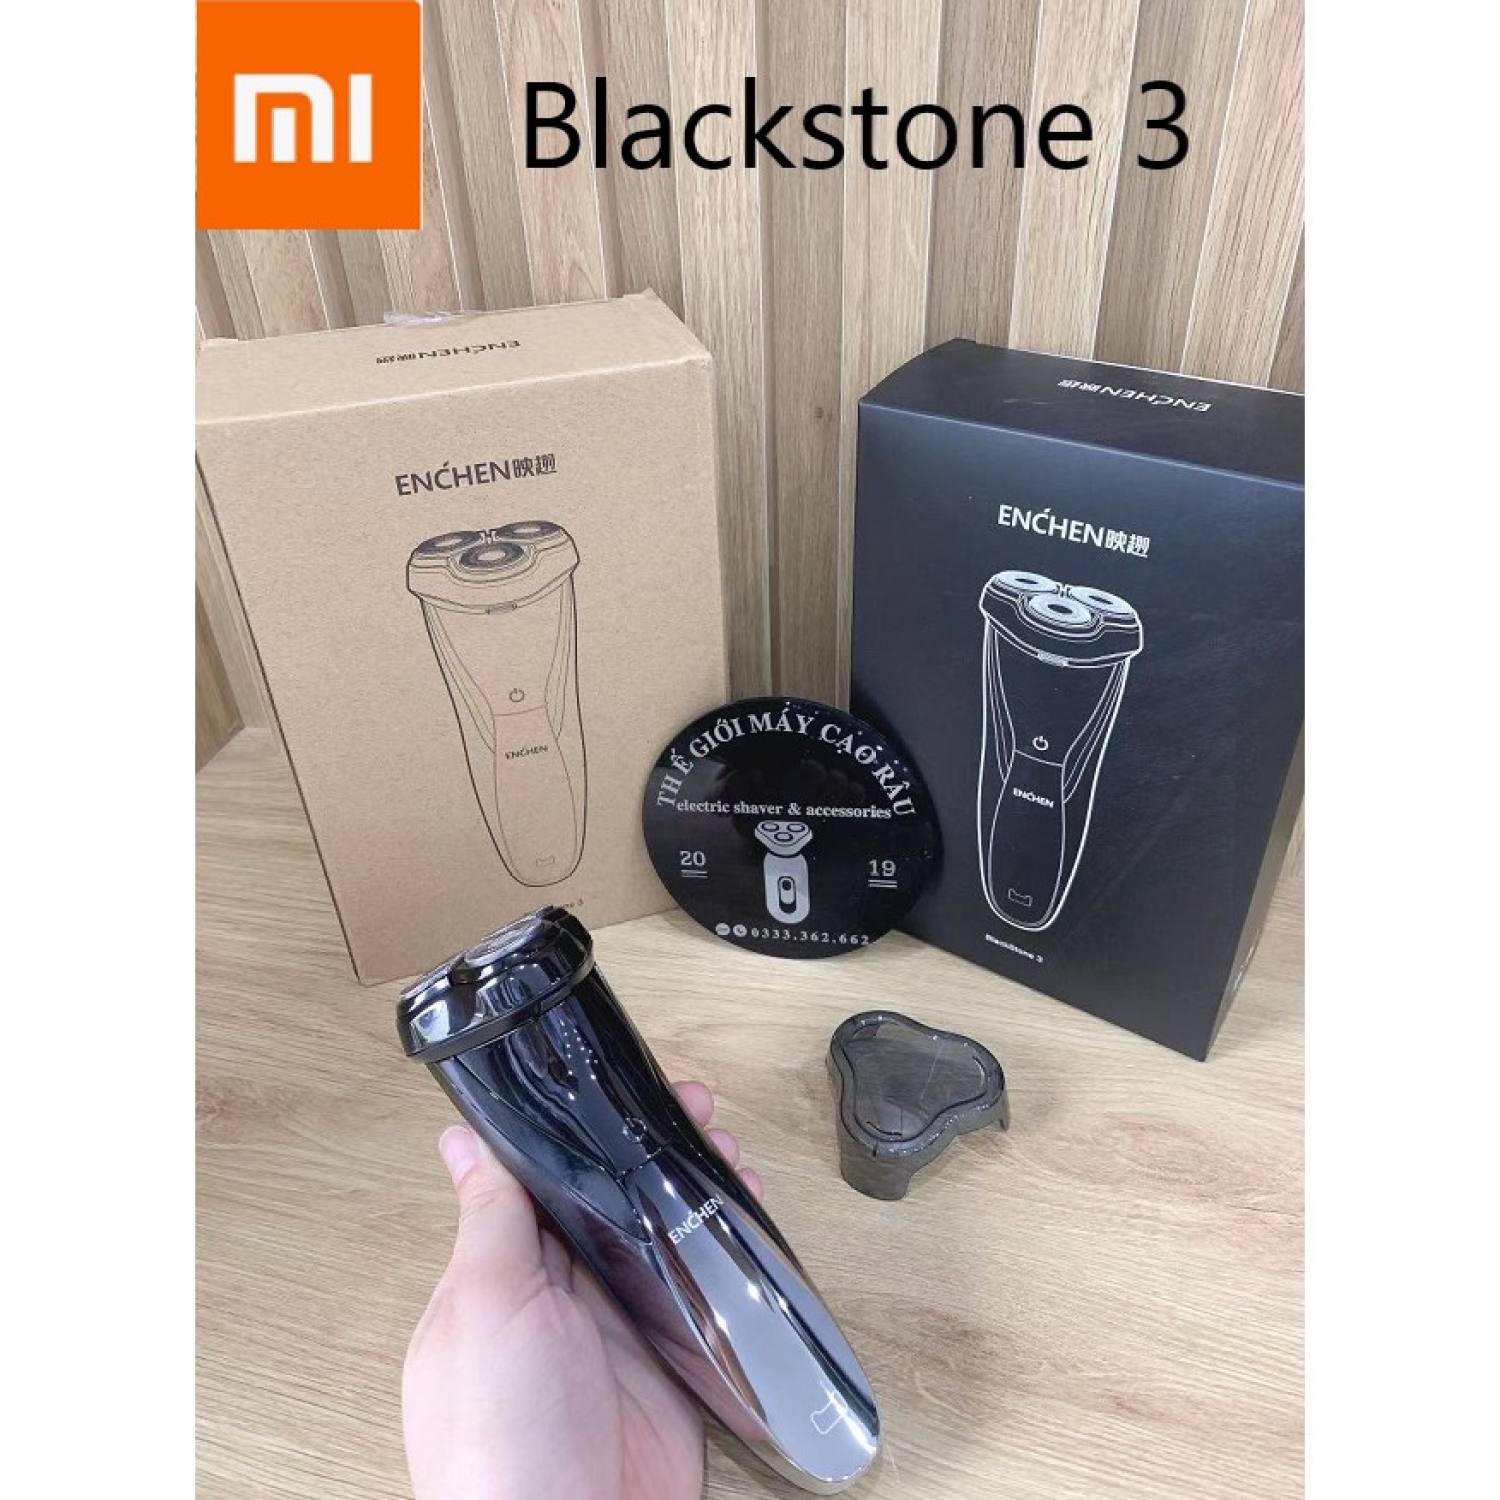 Máy cạo râu Xiaomi Enchen BlackStone 1/ BlackStone 3/ Gentleman 5  - Thegioimaycaorau2019